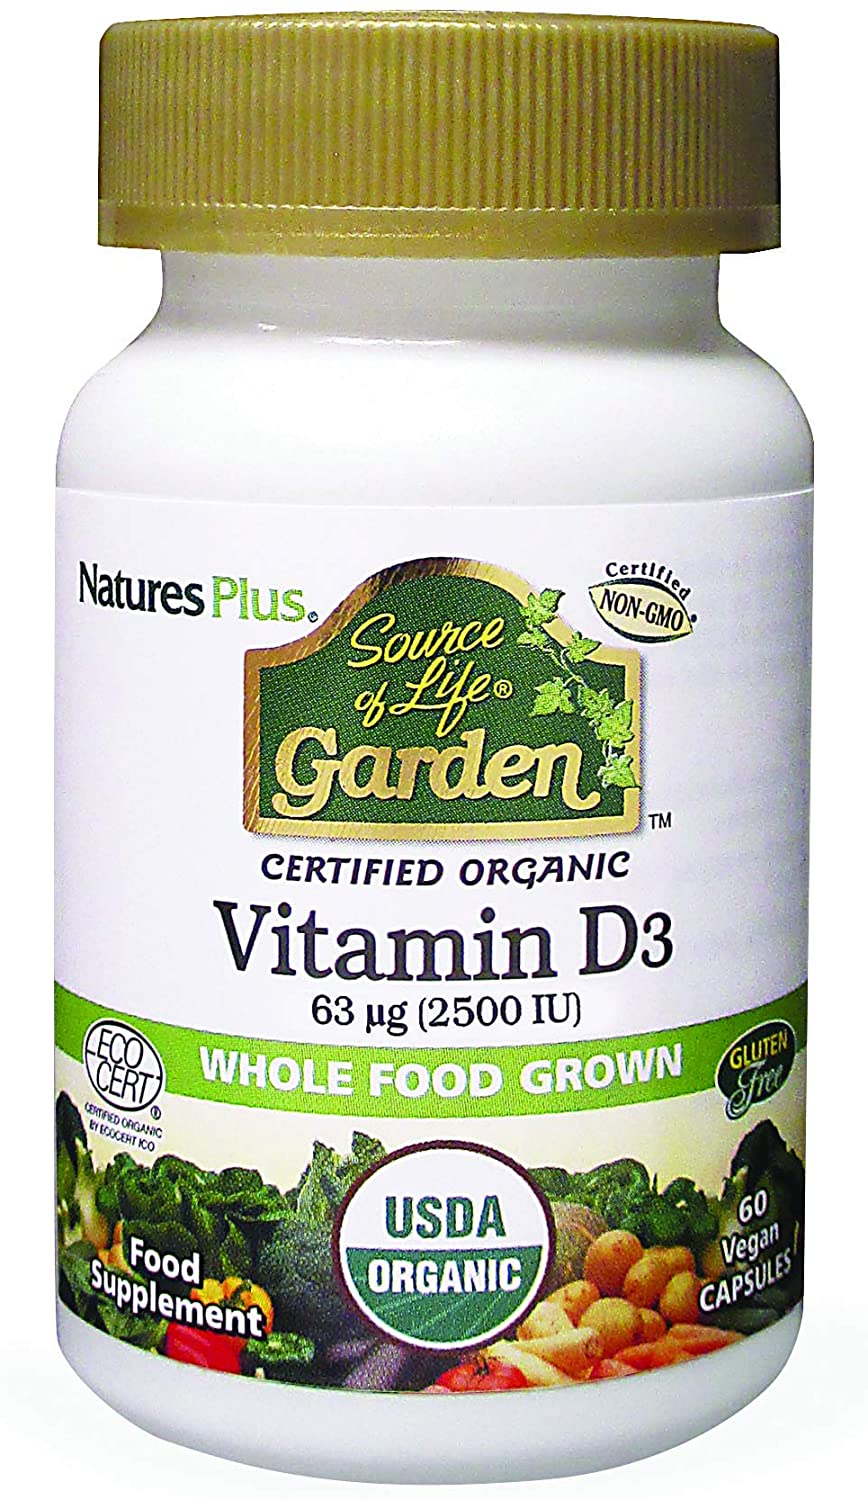 Source of Life Garden Vitamin D3 2500 IU 1-a-day caps